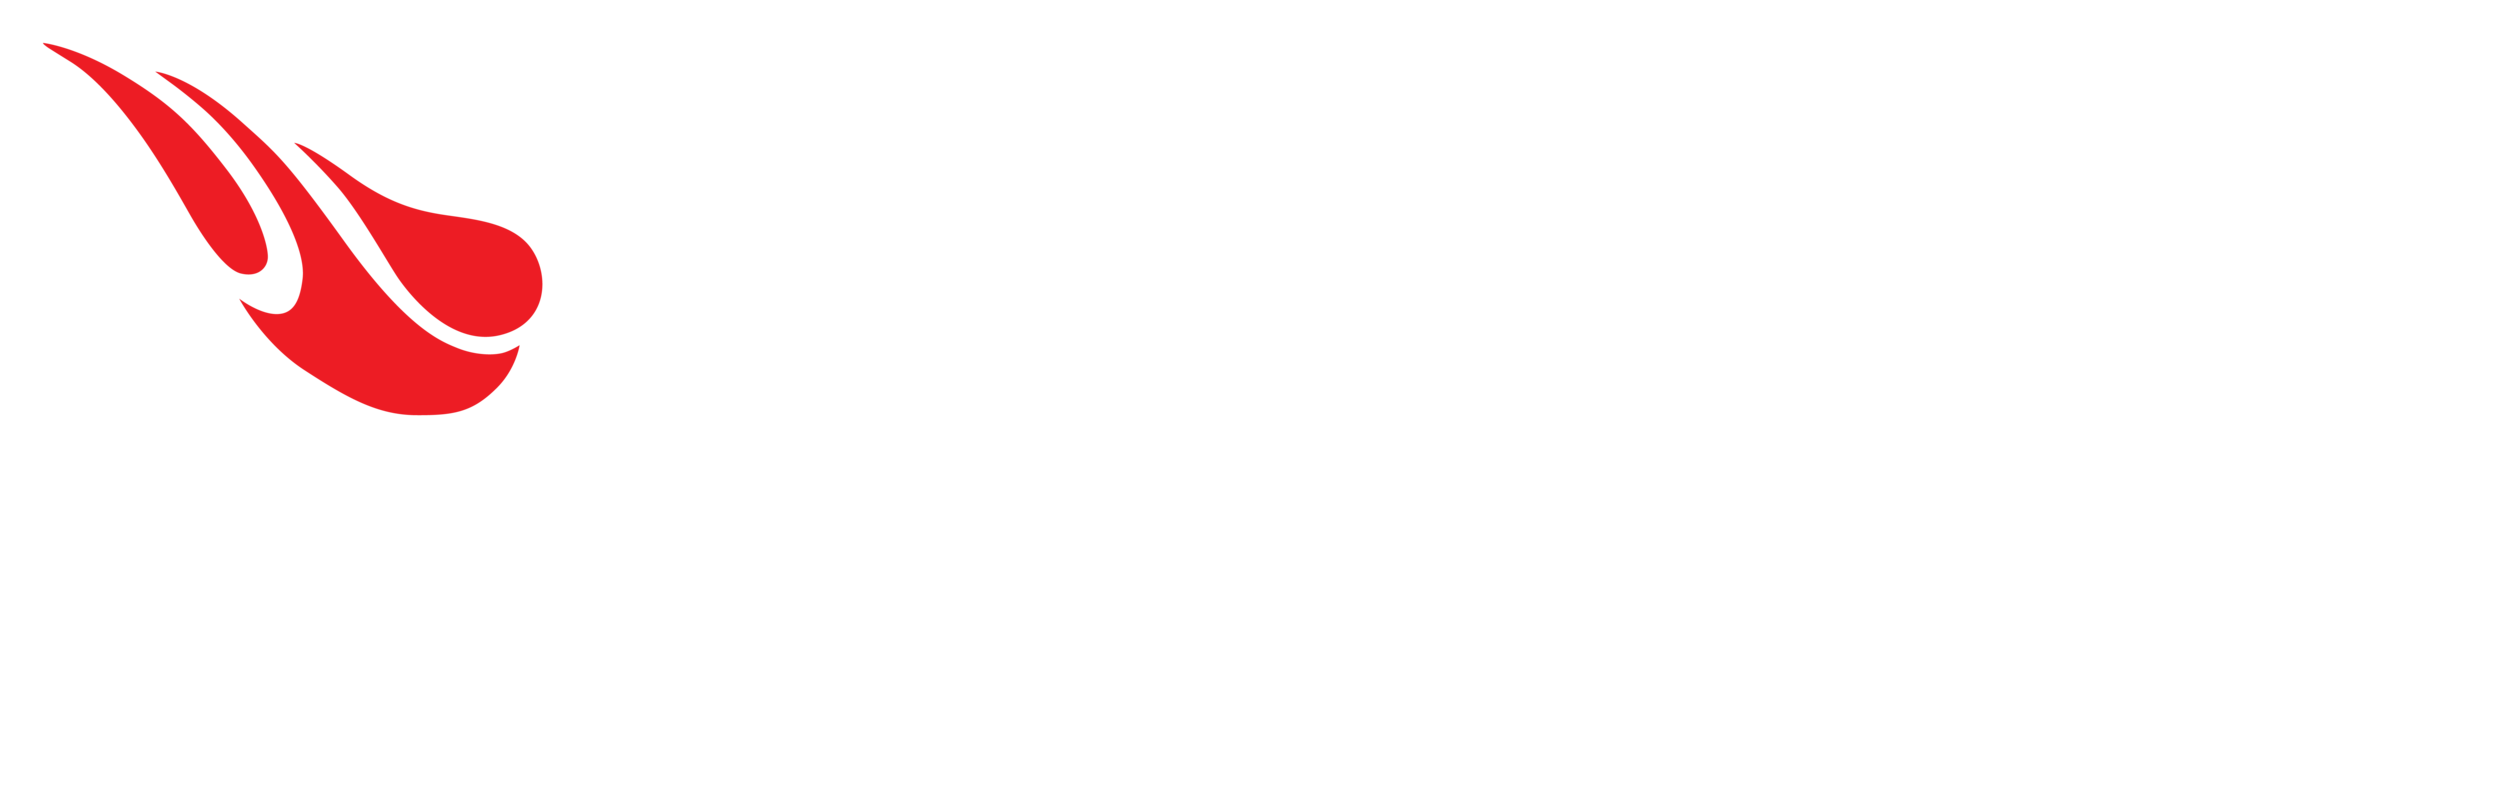 Bainbridge Church of God